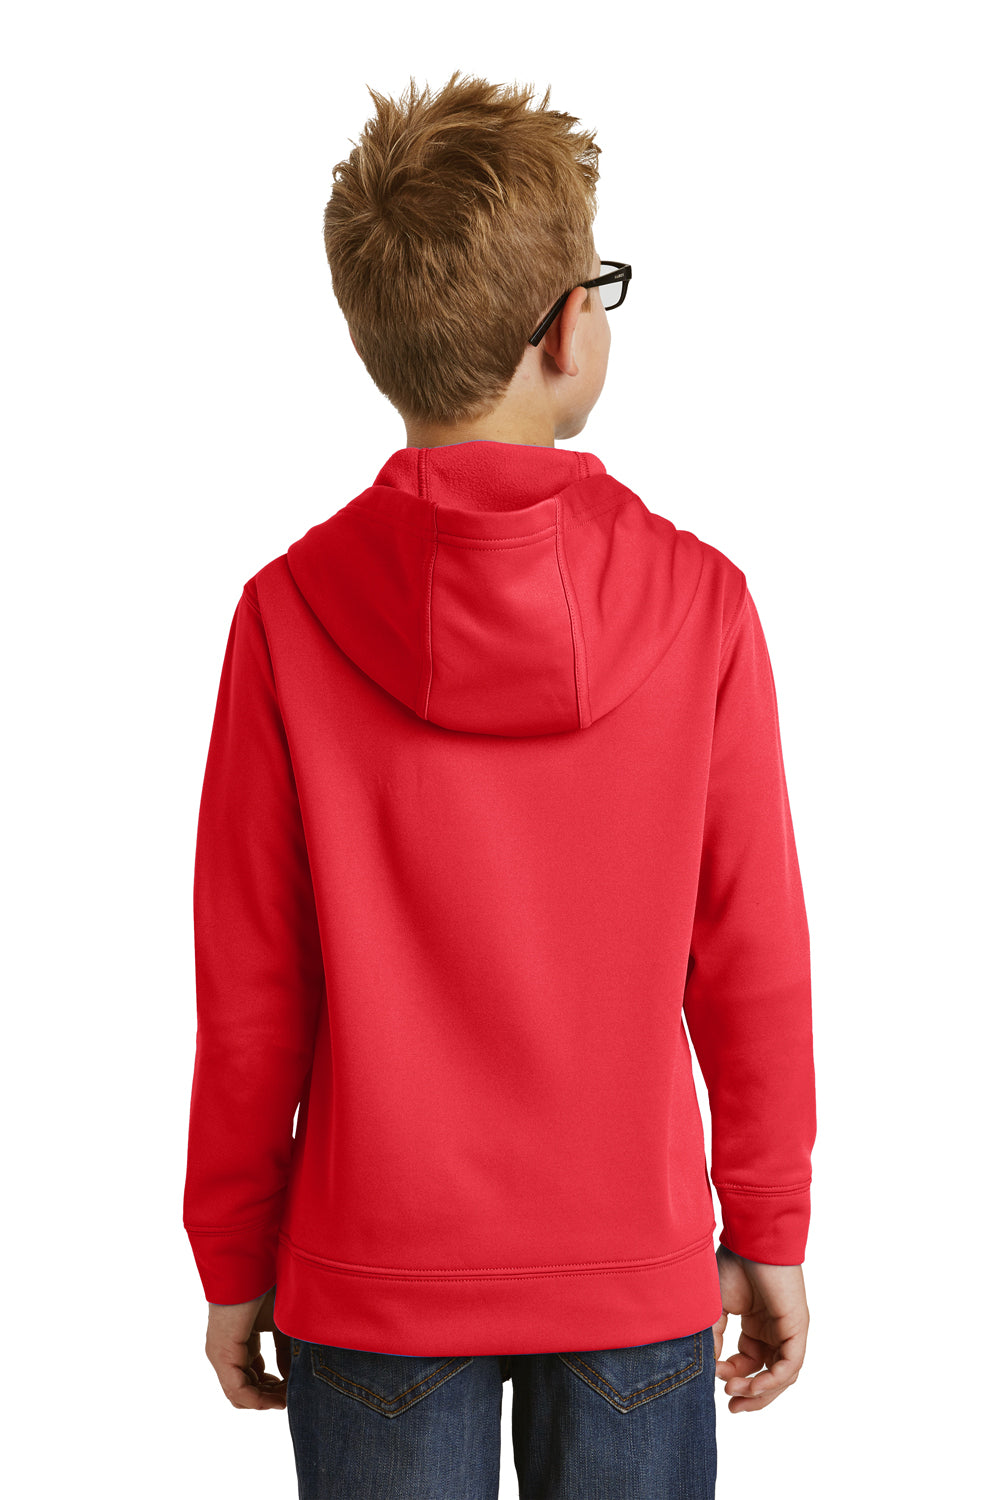 Port & Company PC590YH Youth Dry Zone Performance Moisture Wicking Fleece Hooded Sweatshirt Hoodie Red Back